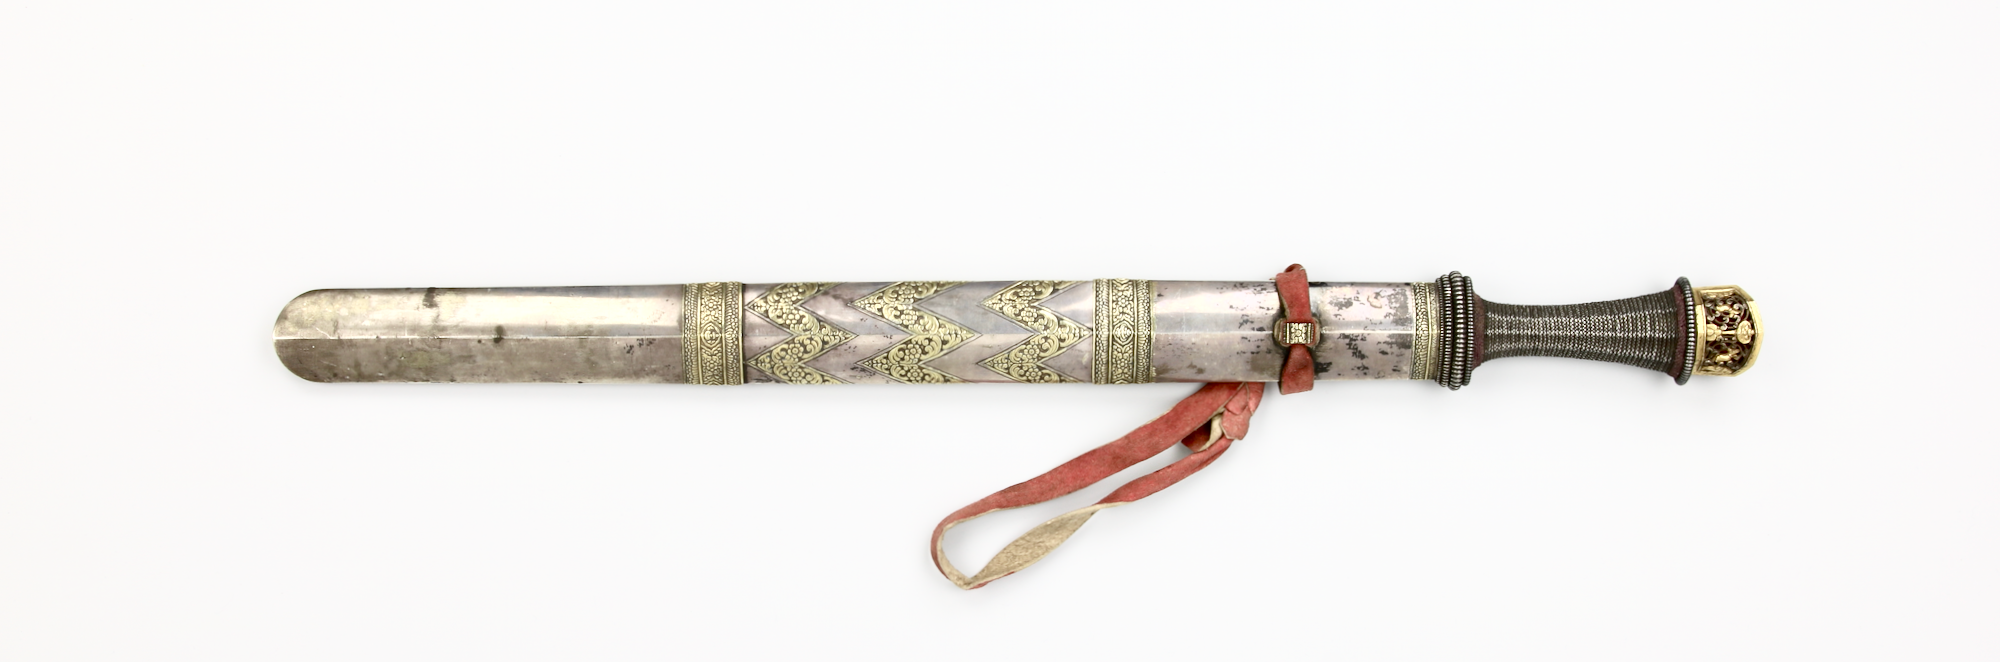 A Bhutanese royal sword with churi chenm scabbard